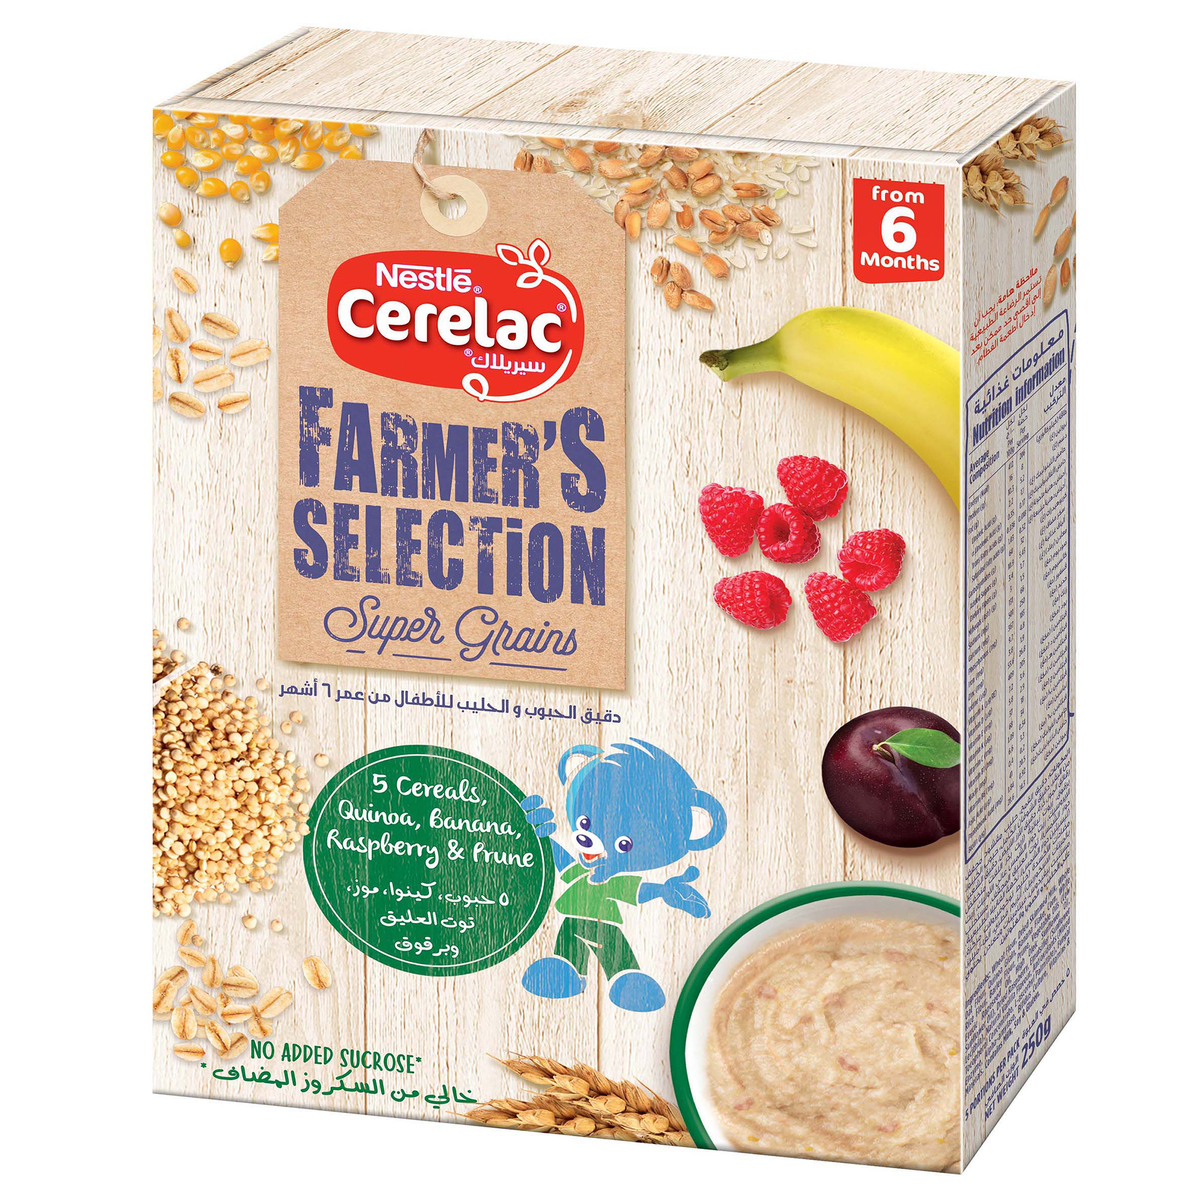 Nestle Cerelac Farmer's Selection Bib 5 Cereals Quinoa Banana Raspberry & Prune From 6 Months 250g